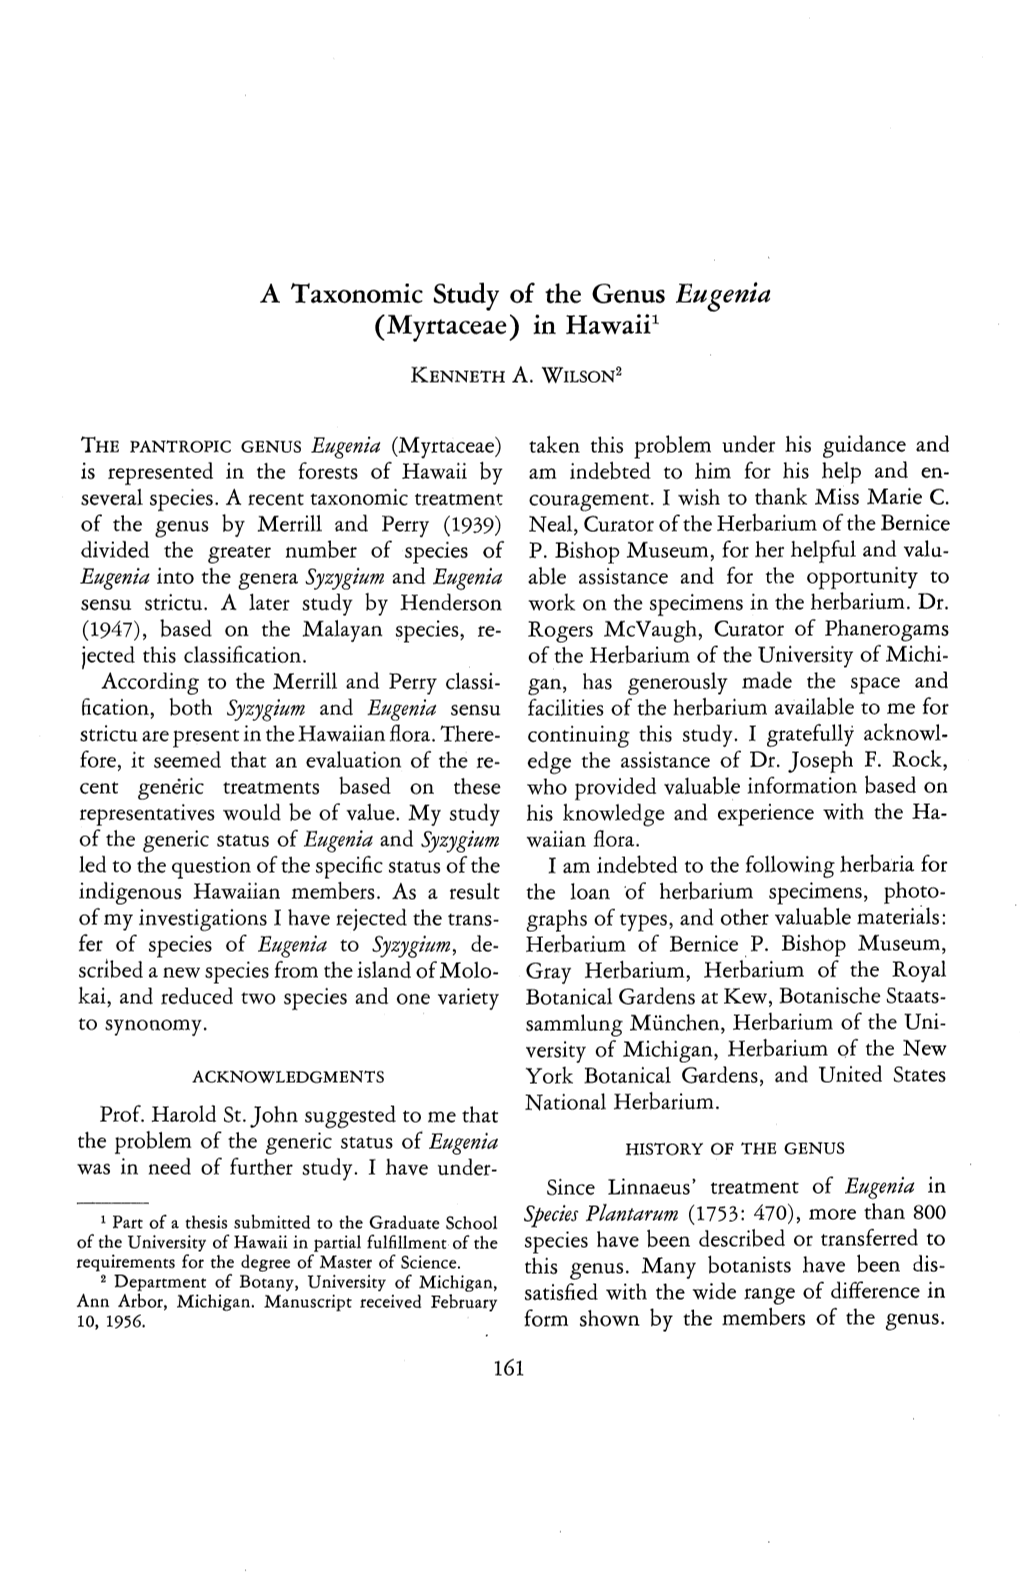 A Taxonomic Study of the Genus Eugenia (Myrtaceae) in Hawaii1